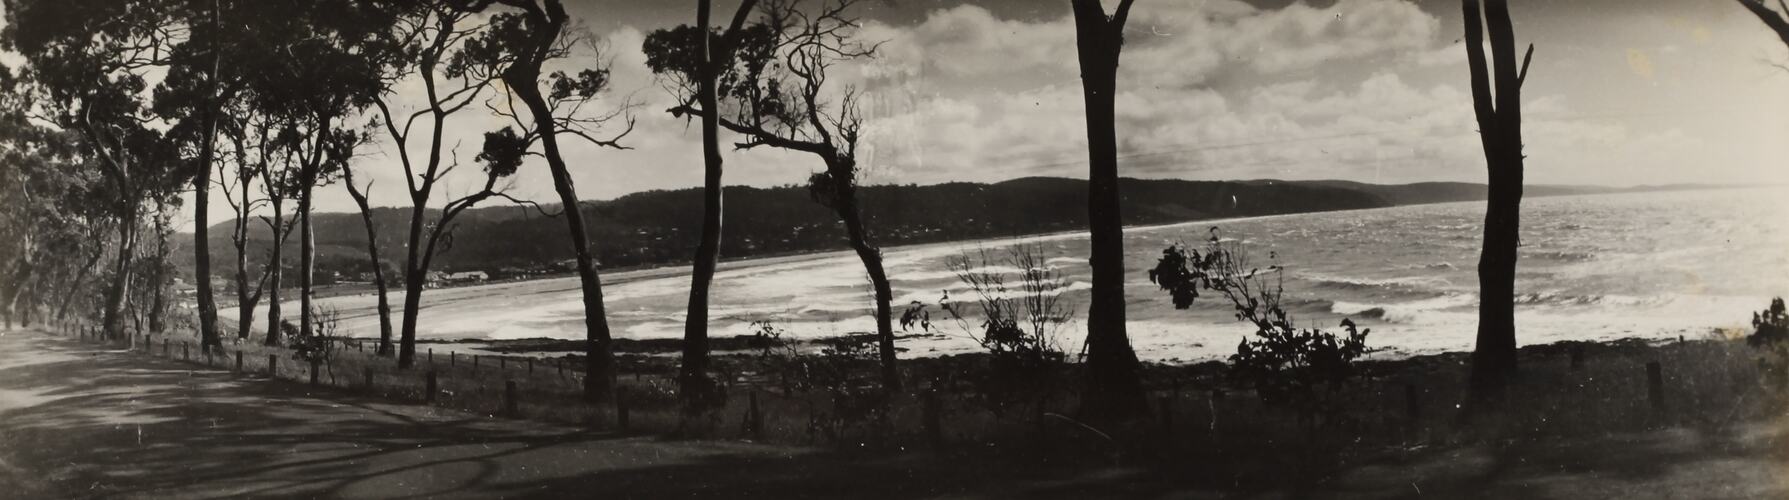 Photograph - Coastal Landscape, Lorne, Victoria, circa 1920s